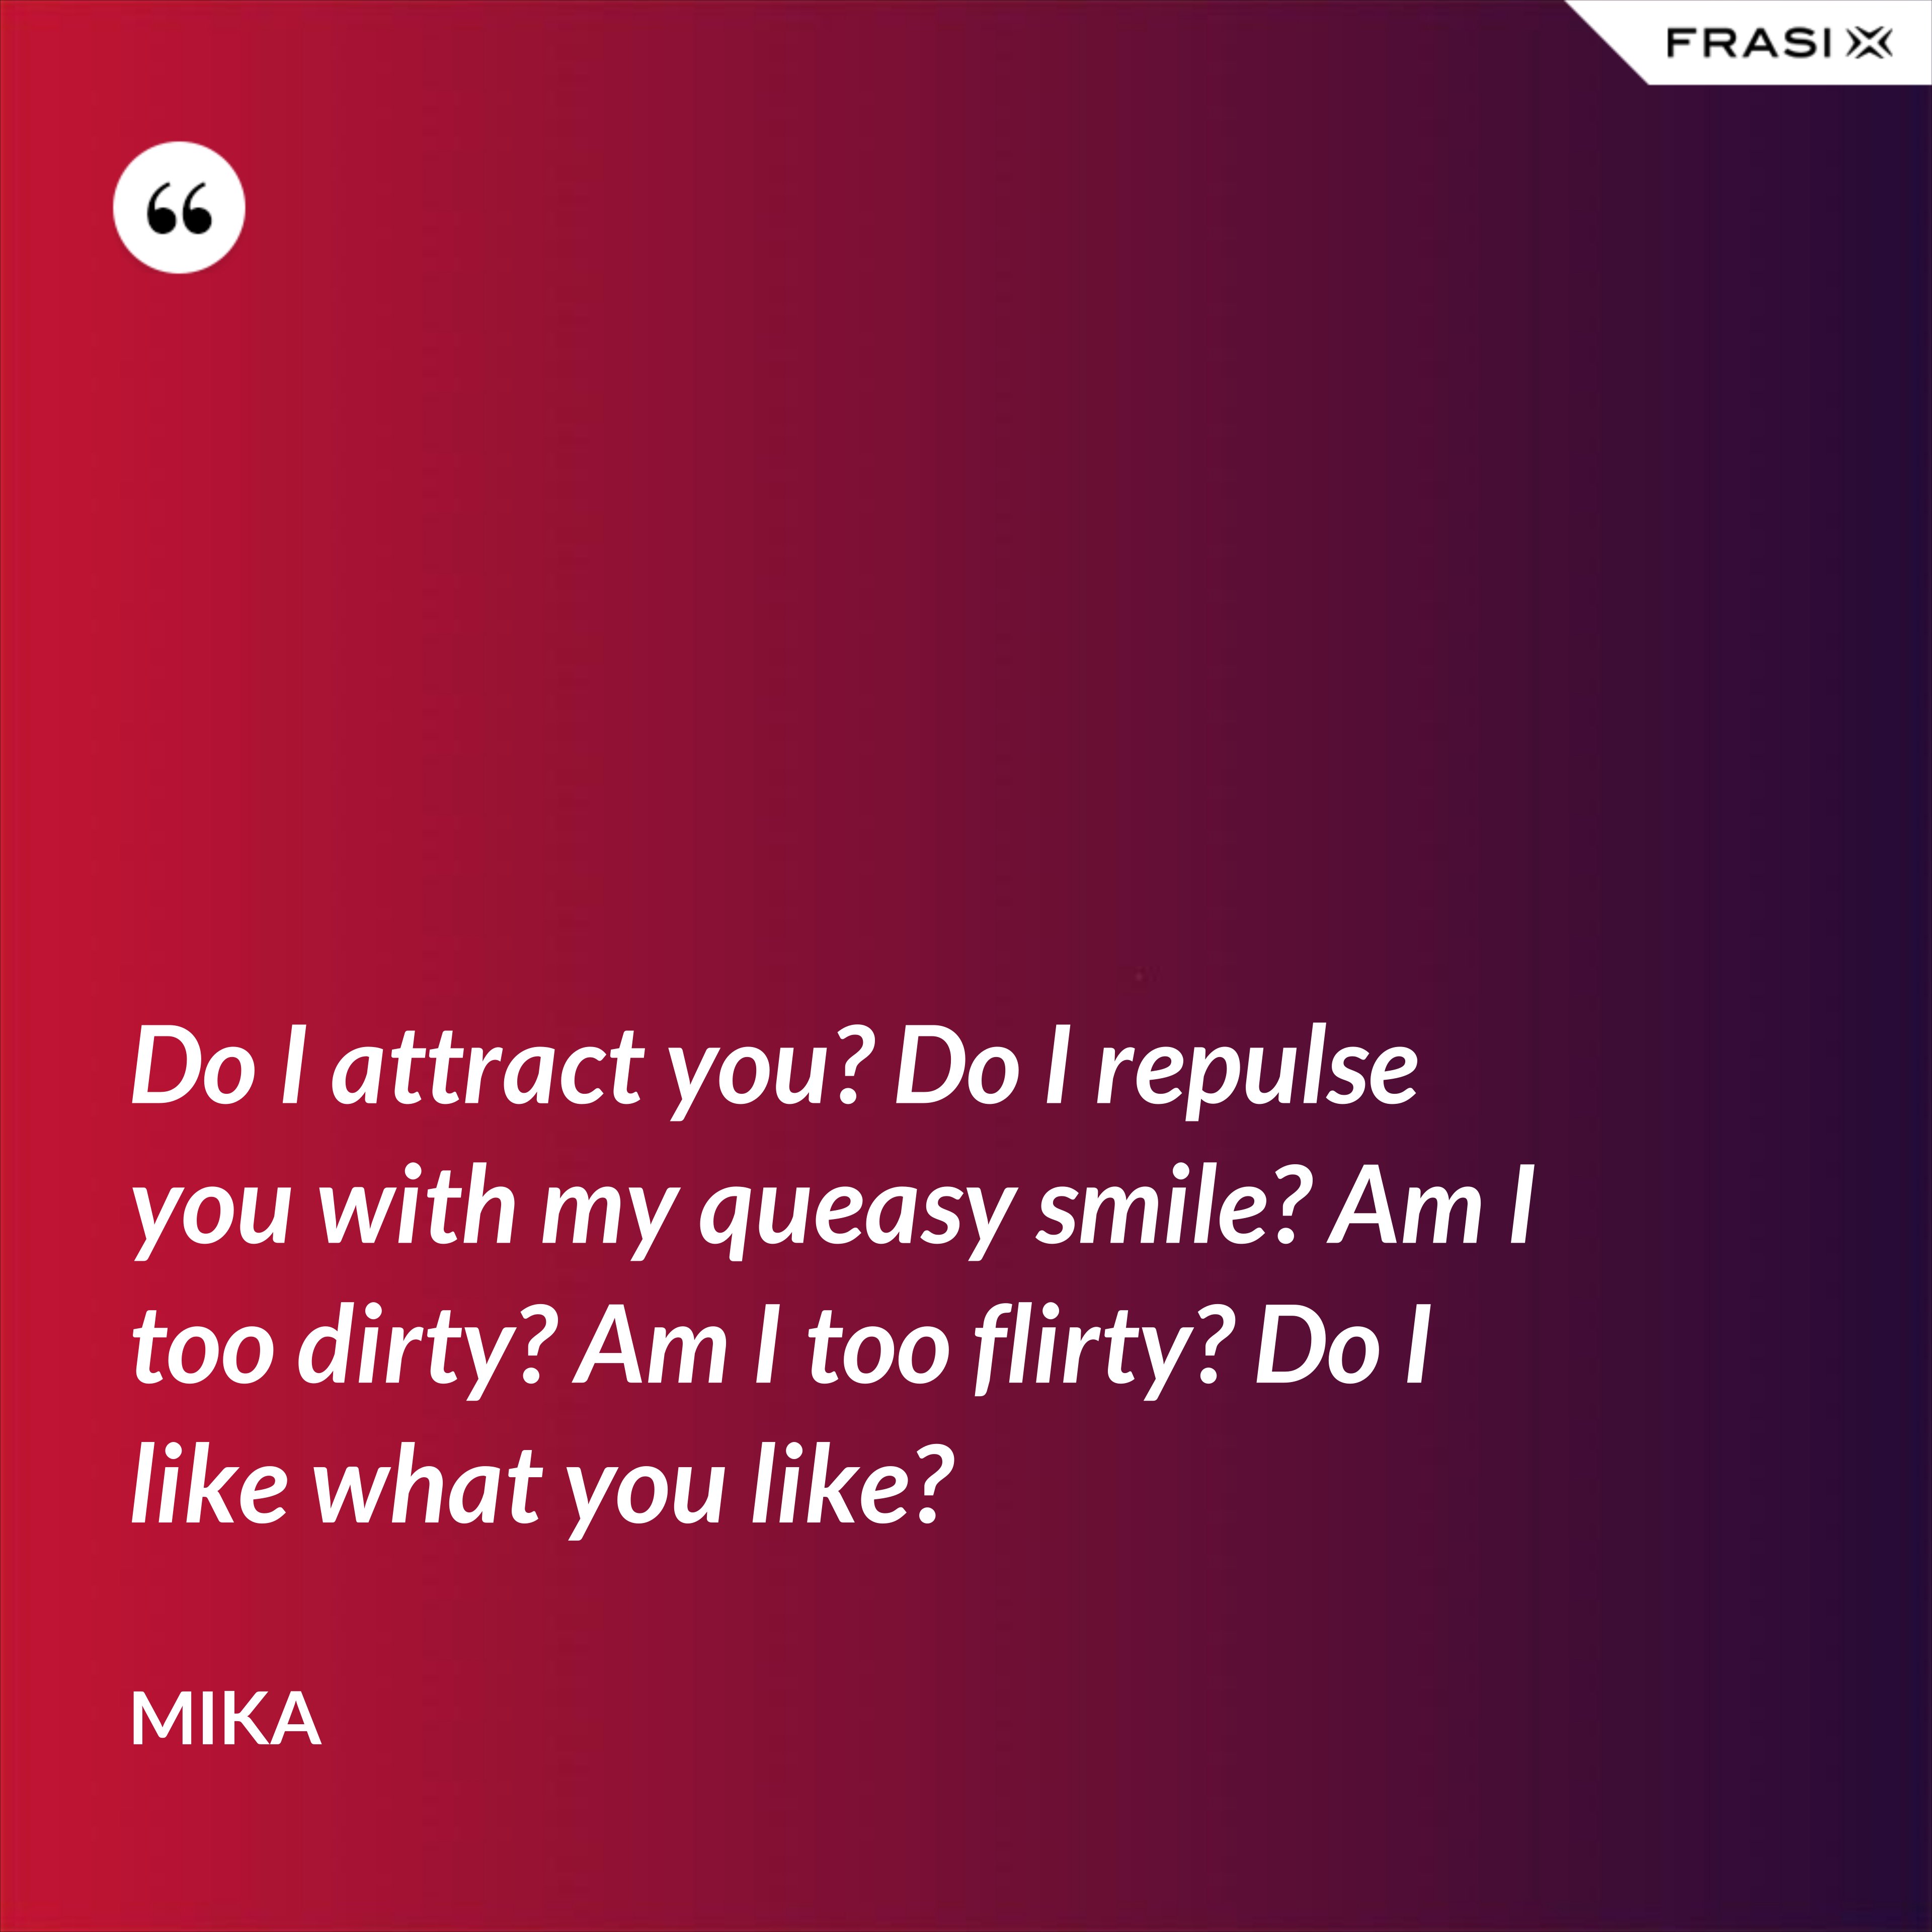 Do I attract you? Do I repulse you with my queasy smile? Am I too dirty? Am I too flirty? Do I like what you like? - Mika